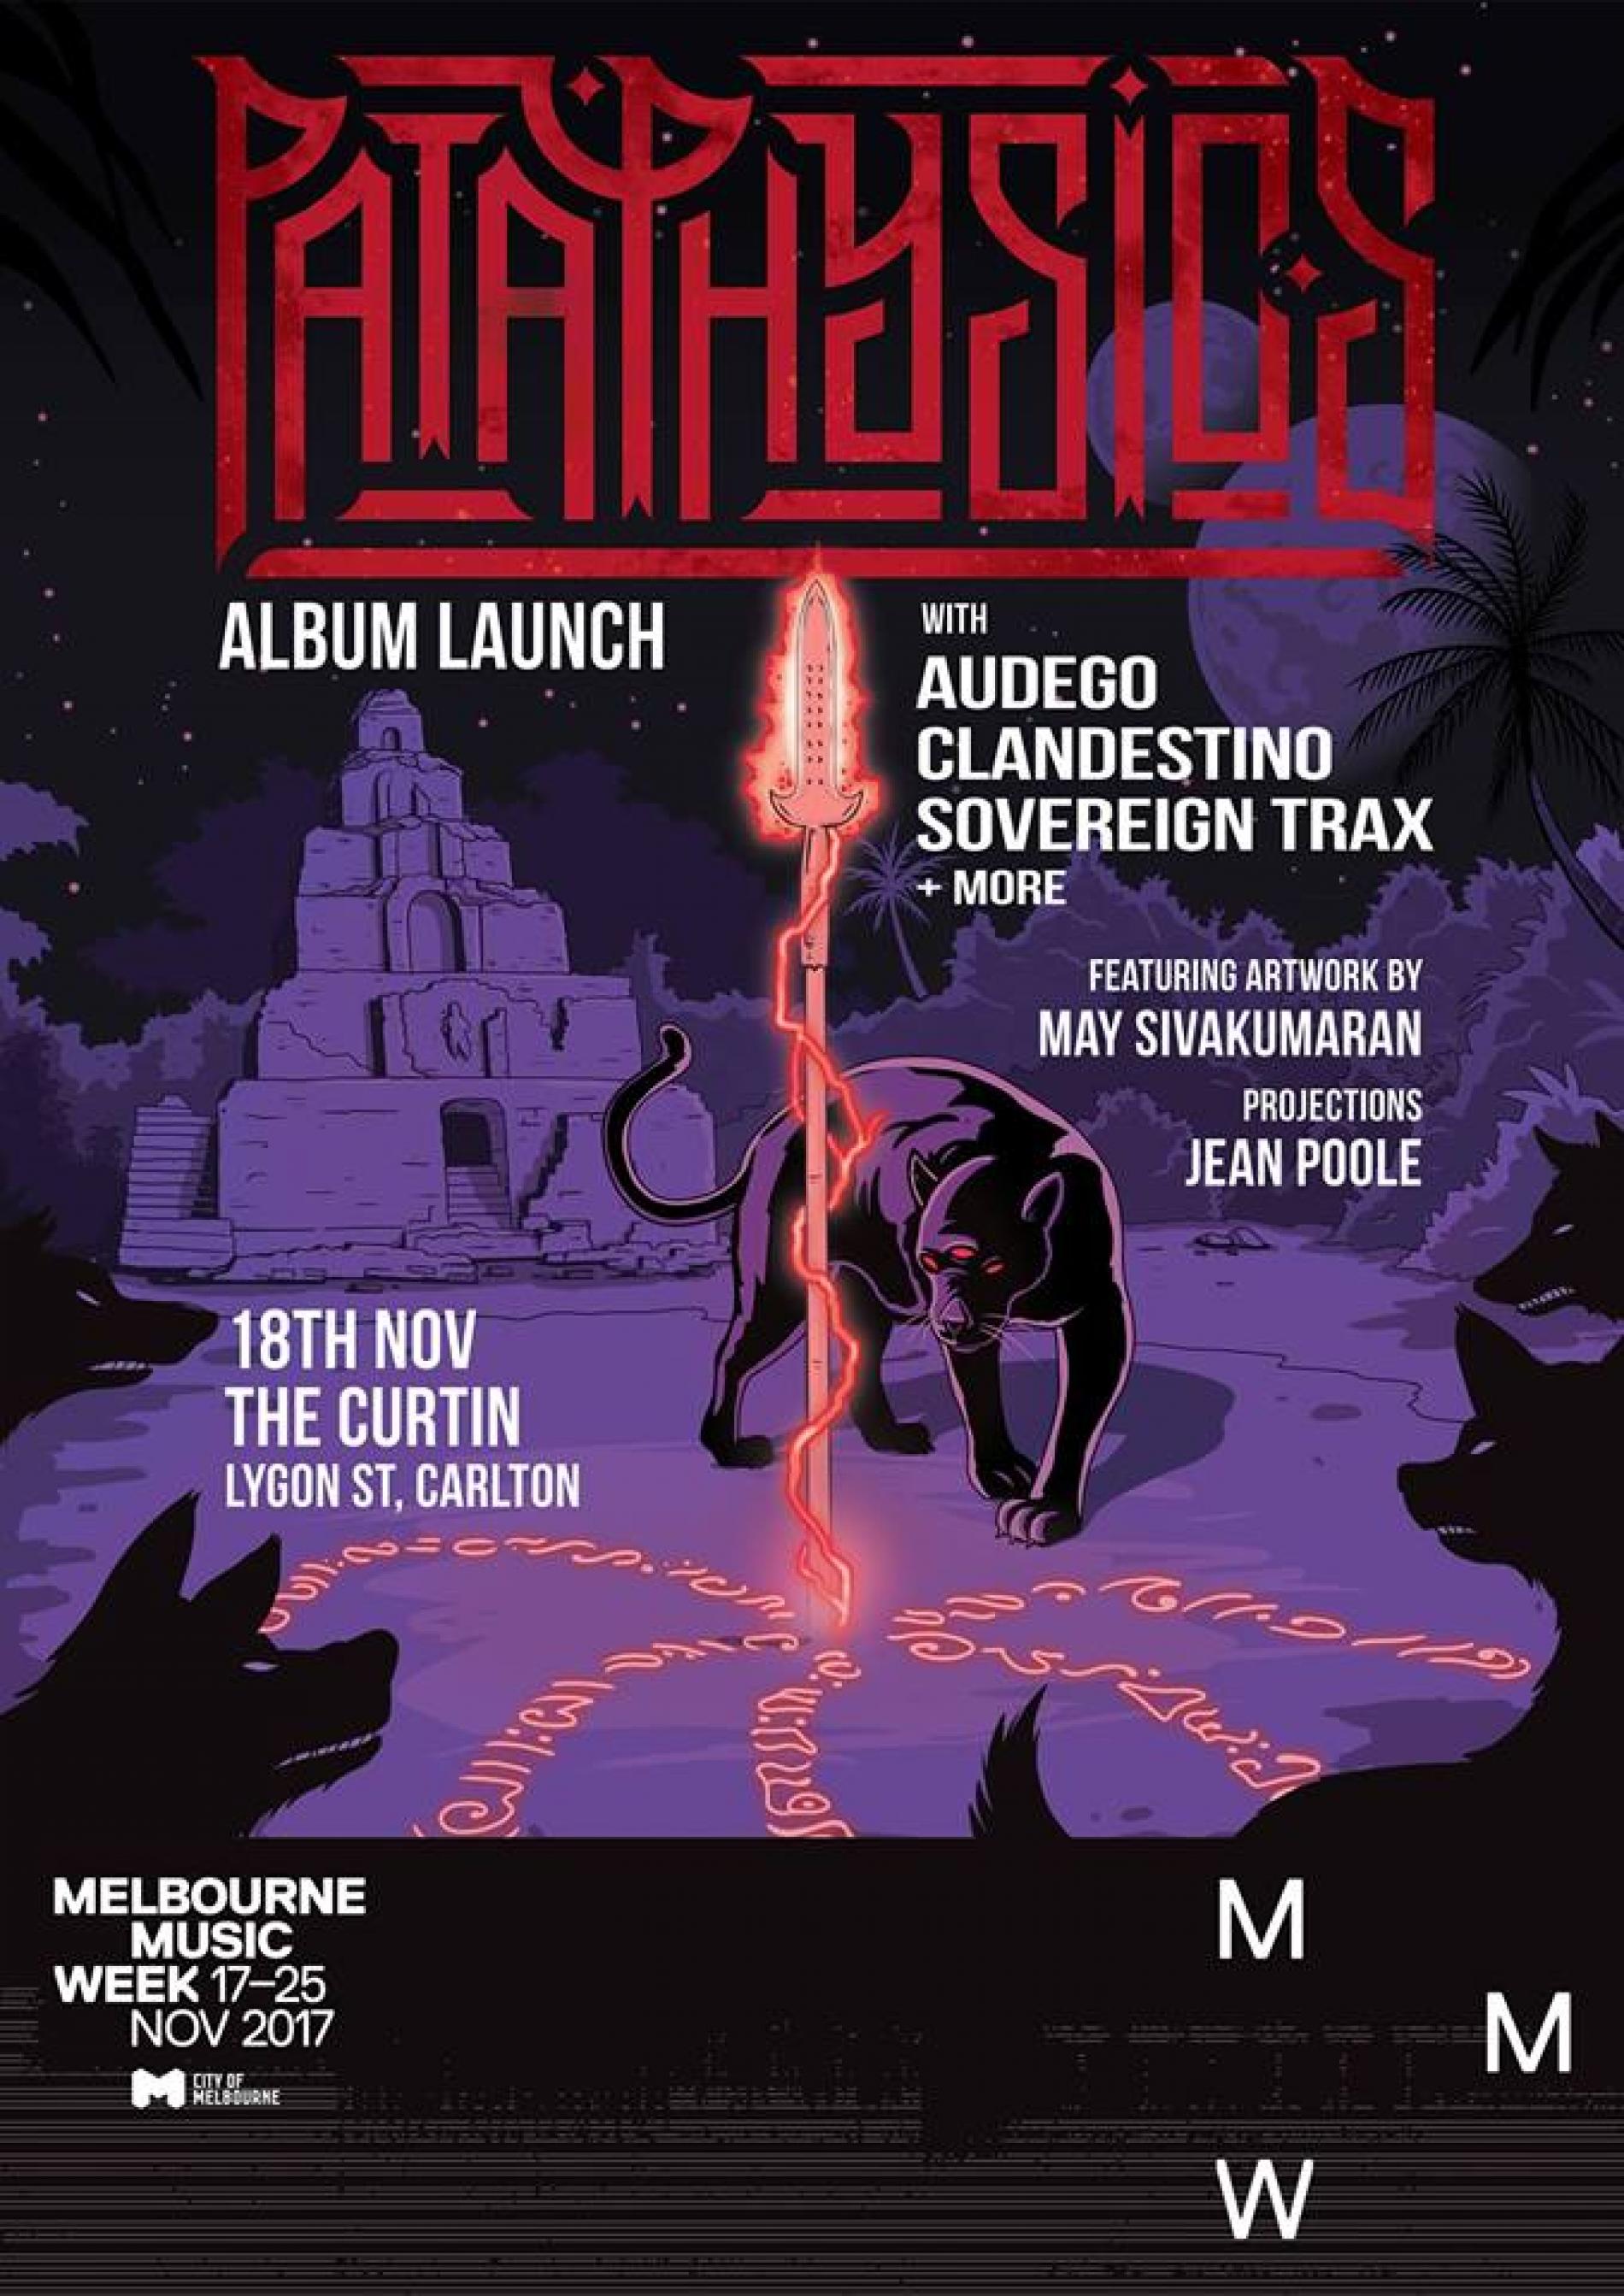 MMW Presents Pataphysics Album Launch, Audego, Sovereign Trax